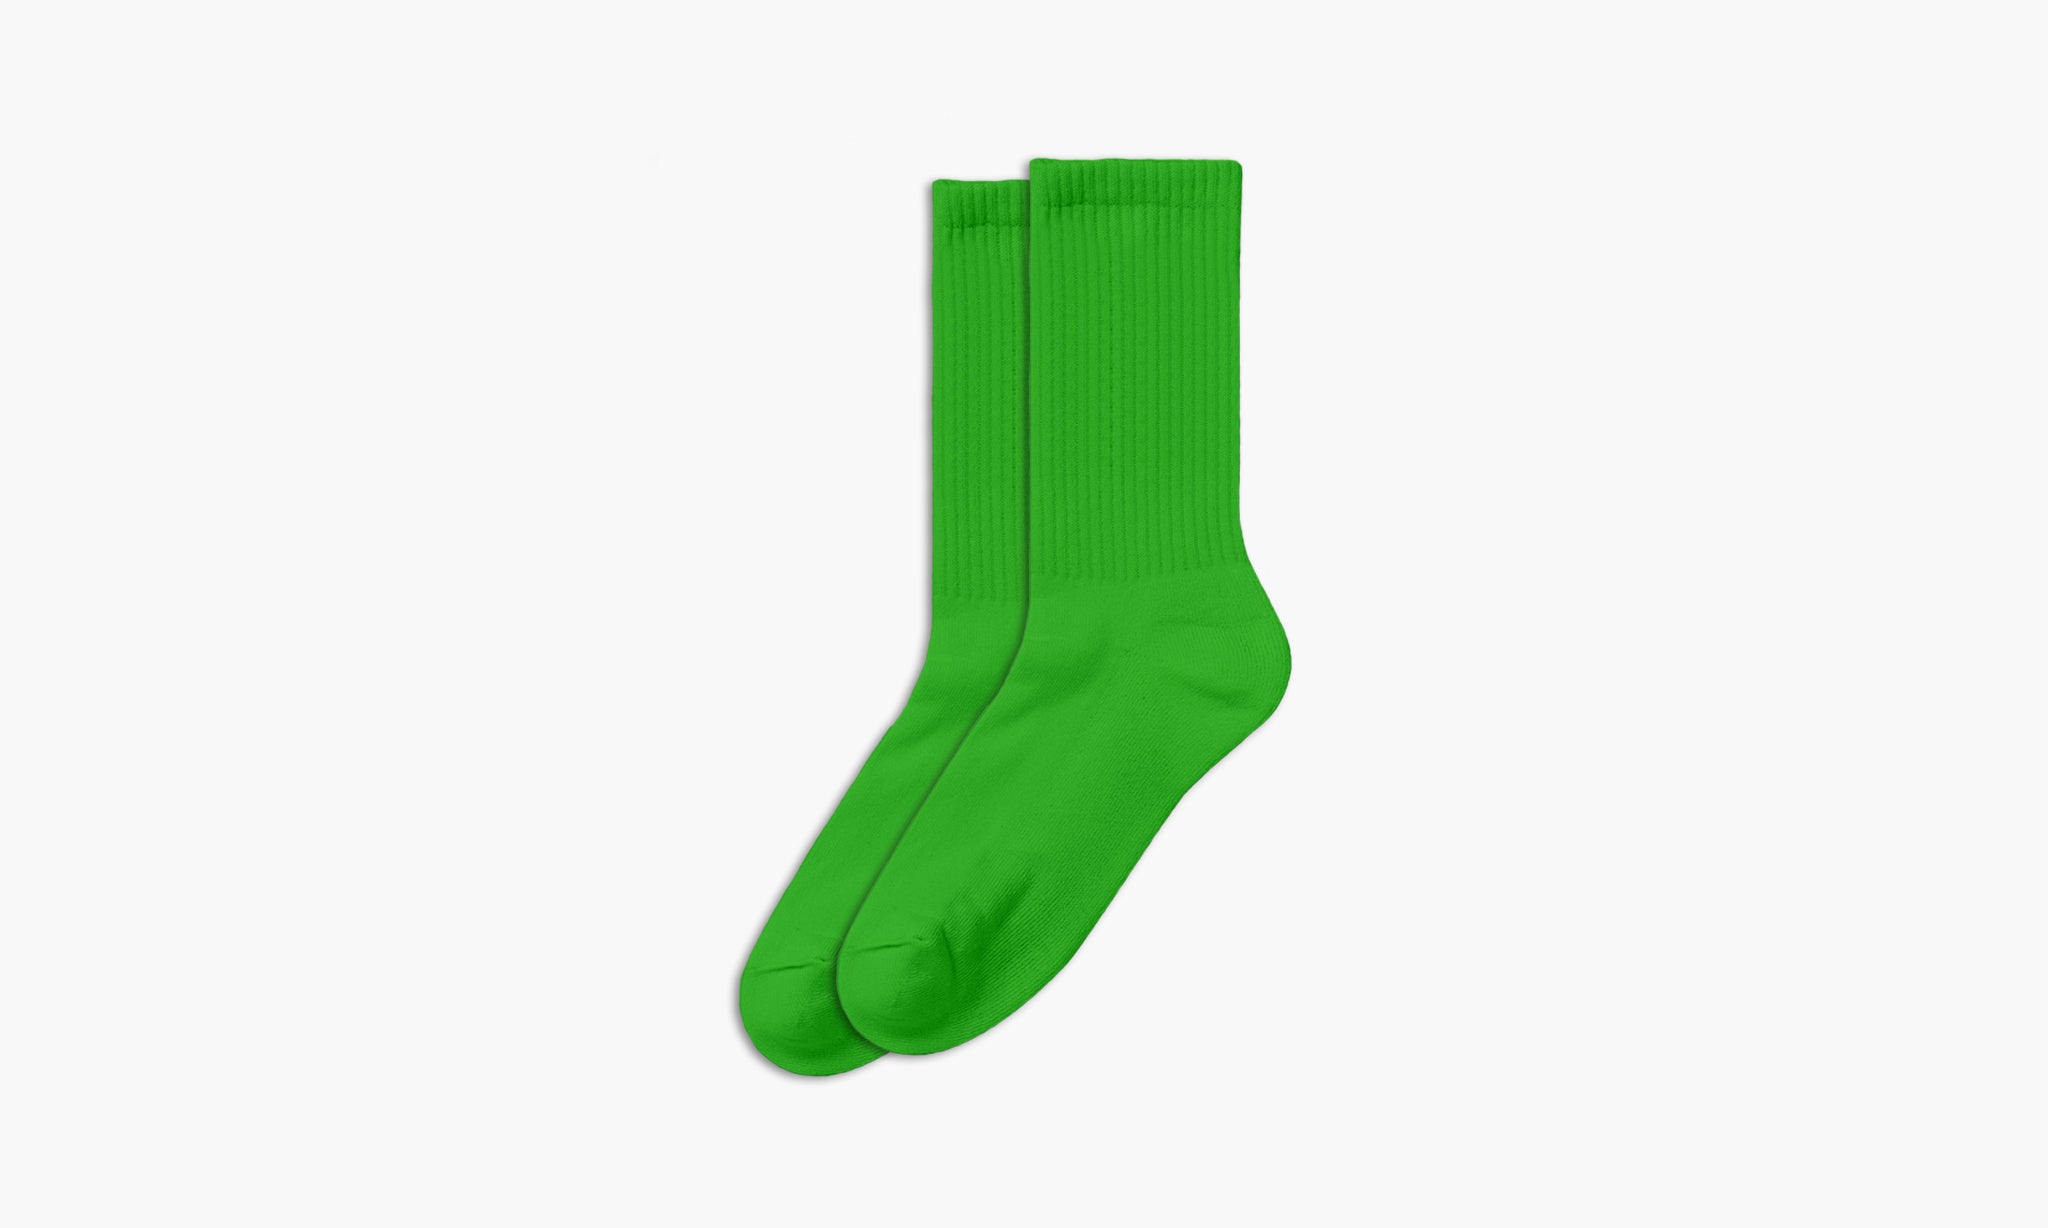 Crew Socks "Green Apple"